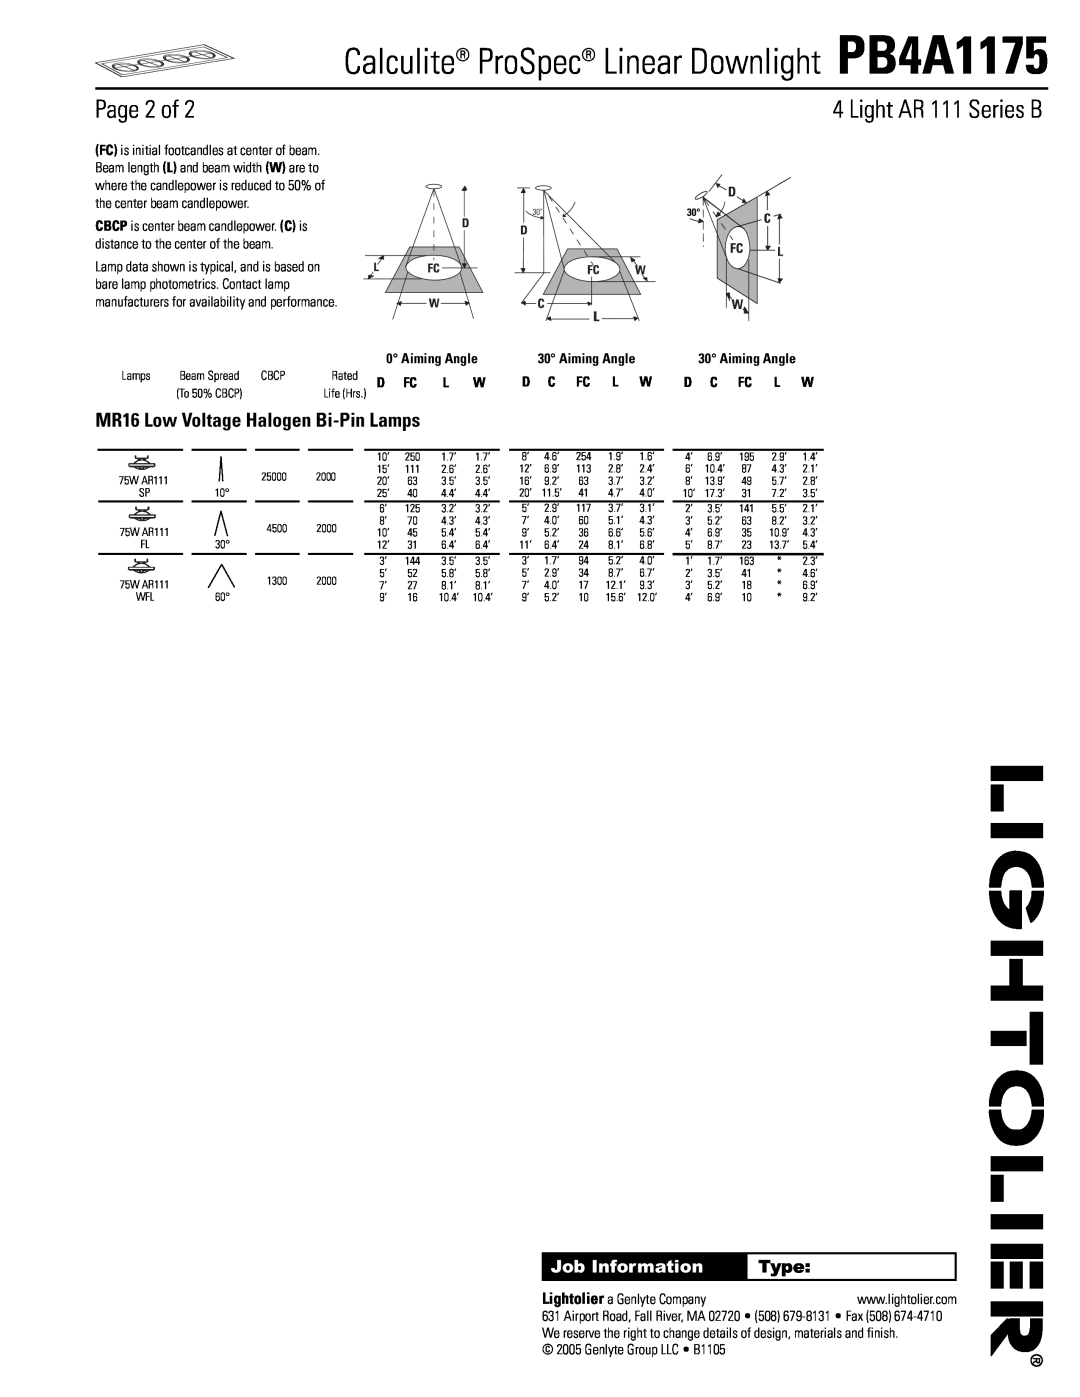 Lightolier Page 2 of, MR16 Low Voltage Halogen Bi-PinLamps, Calculite ProSpec Linear Downlight PB4A1175, Type, Cbcp 